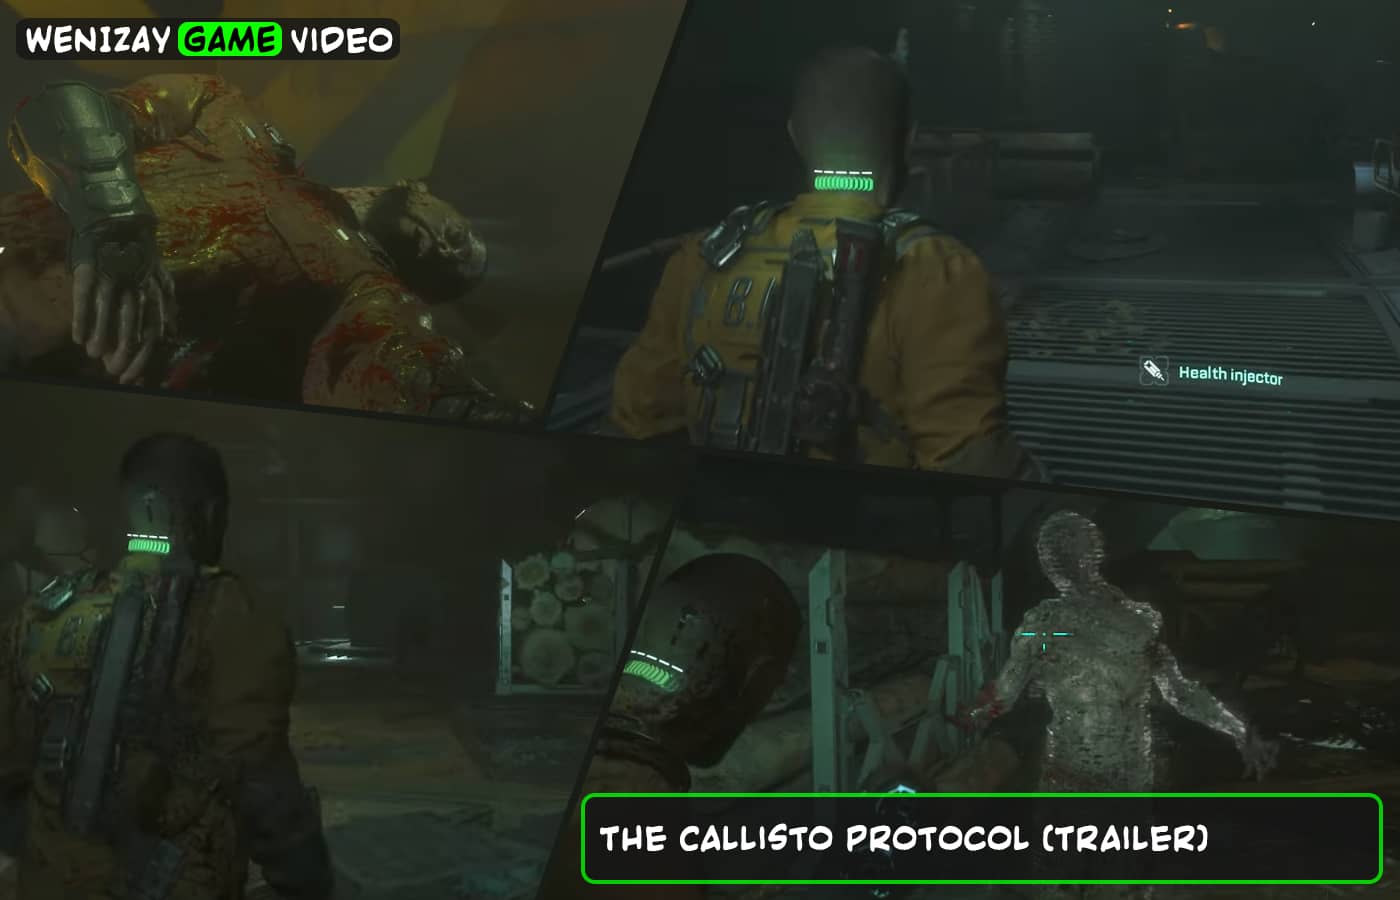 The Callisto Protocol, The Callisto Protocol gameplay trailer